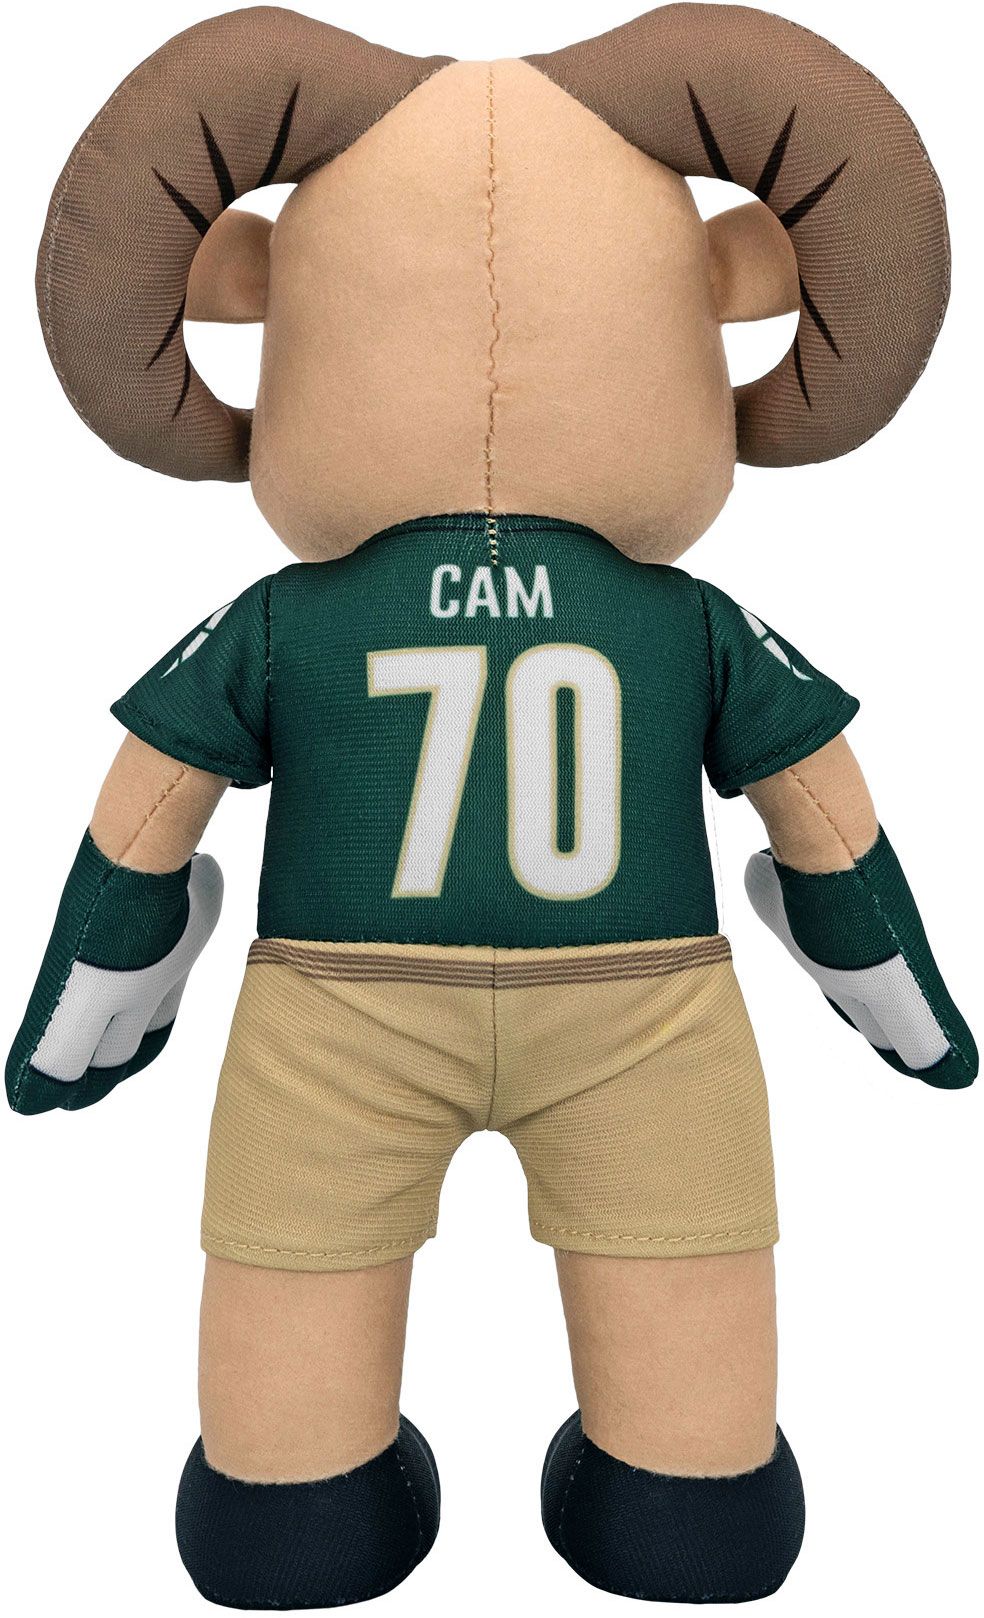 Uncanny Brands Colorado State Rams Mascot Plush